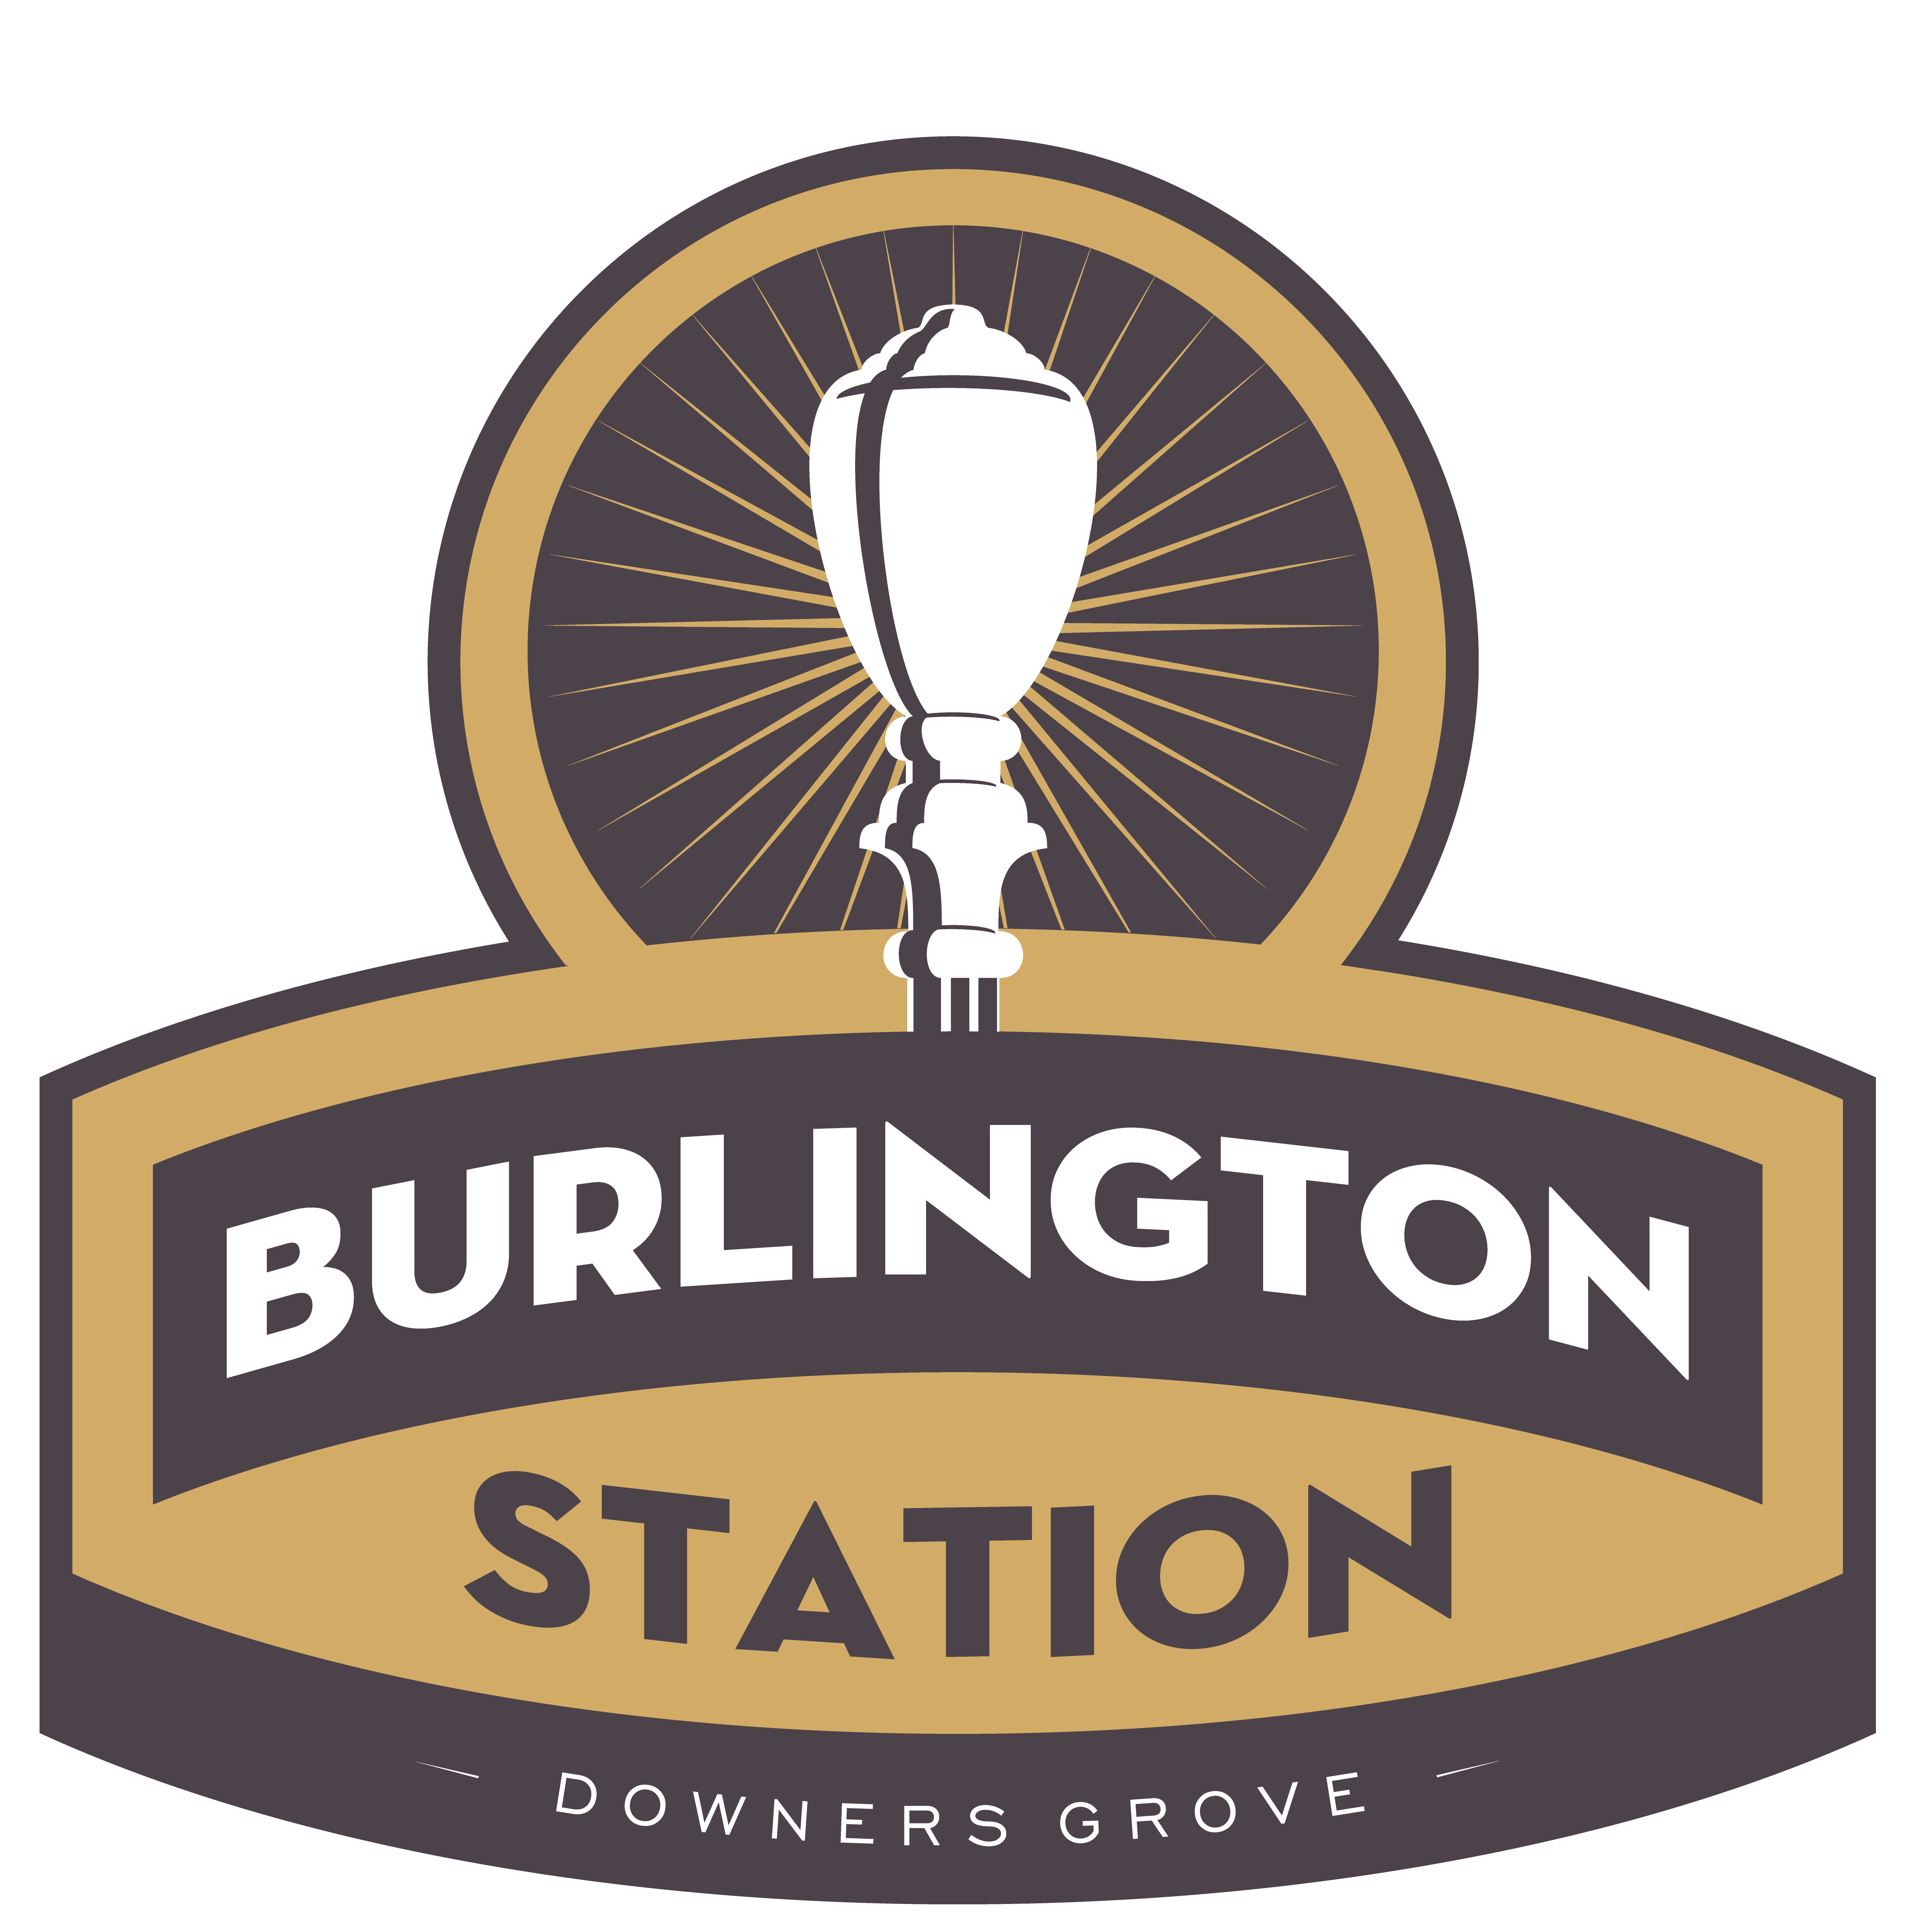 BURLINGTON STATION LUXURY APARTMENTS